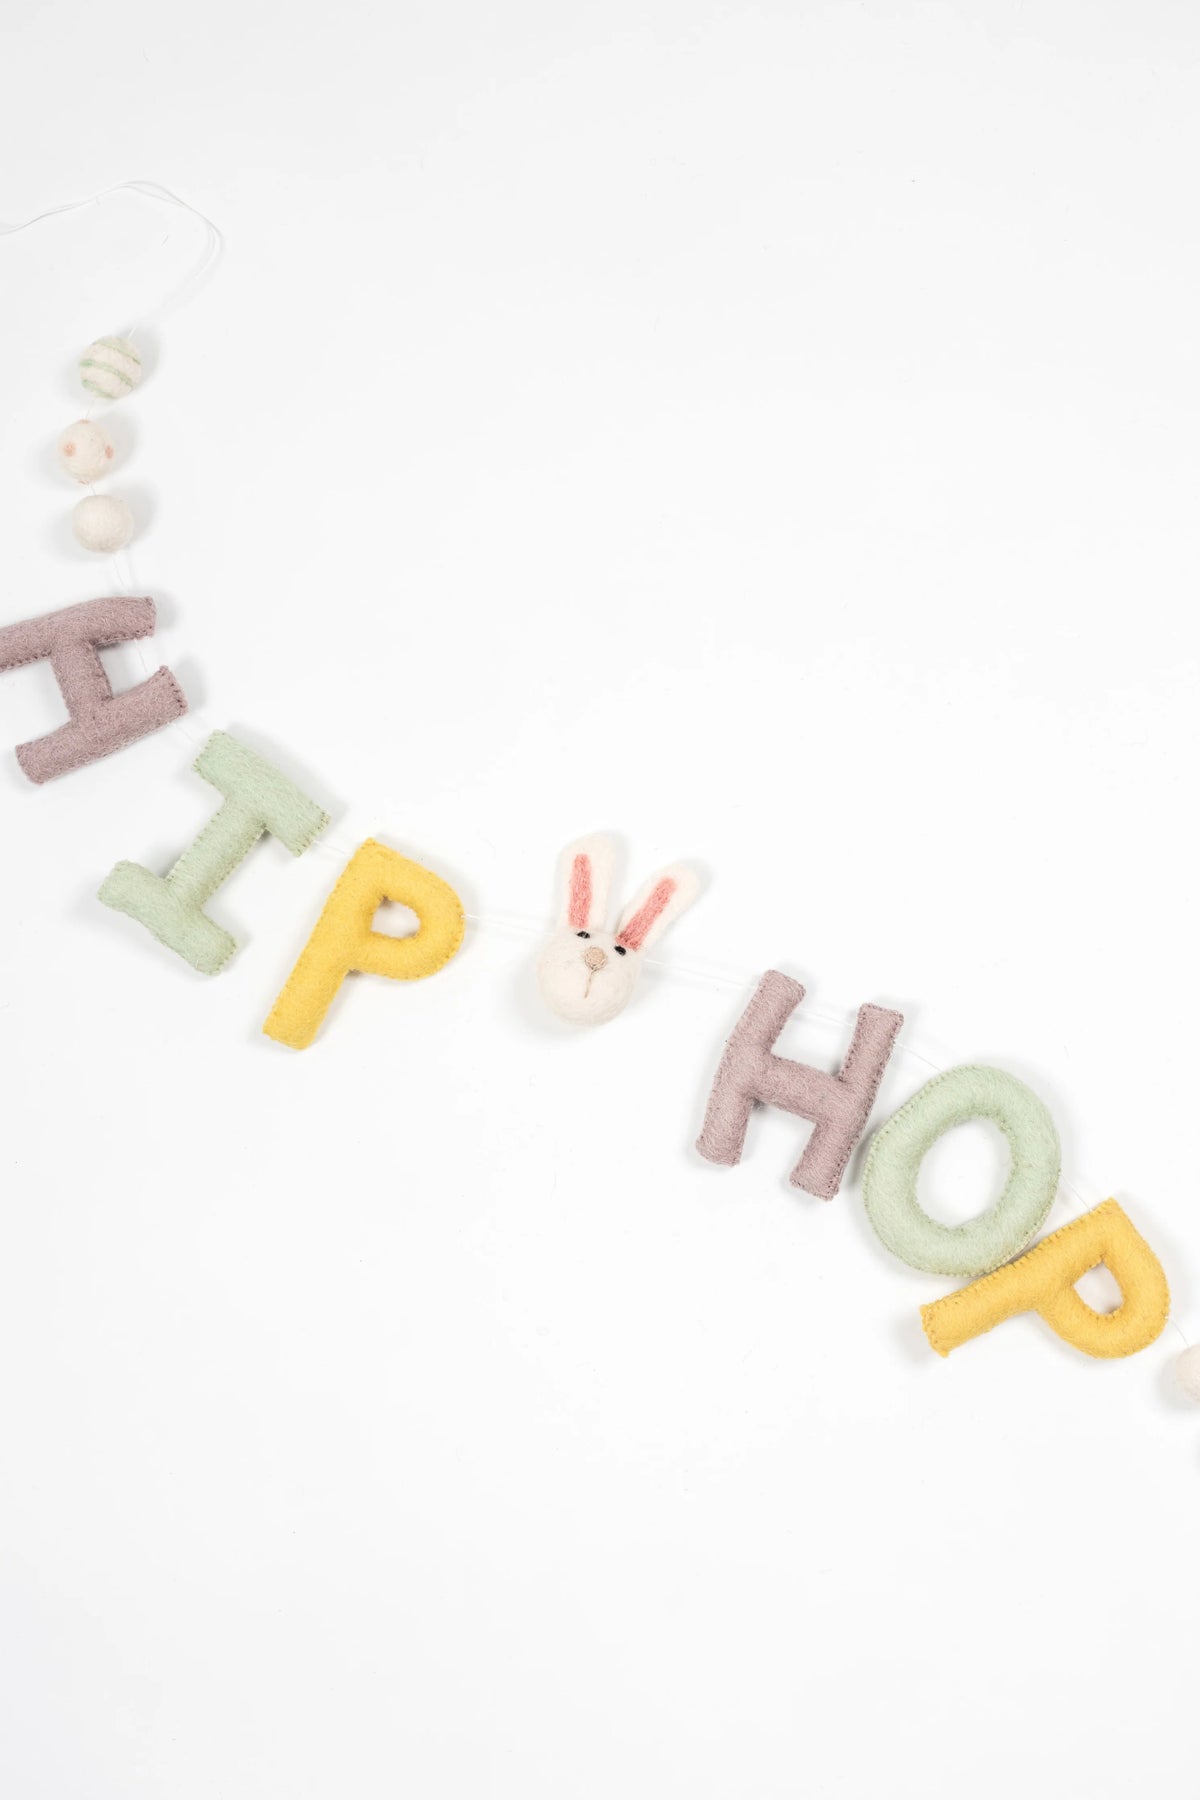 HIP HOP Easter Felt Garland by Lil' North Co. - Maude Kids Decor